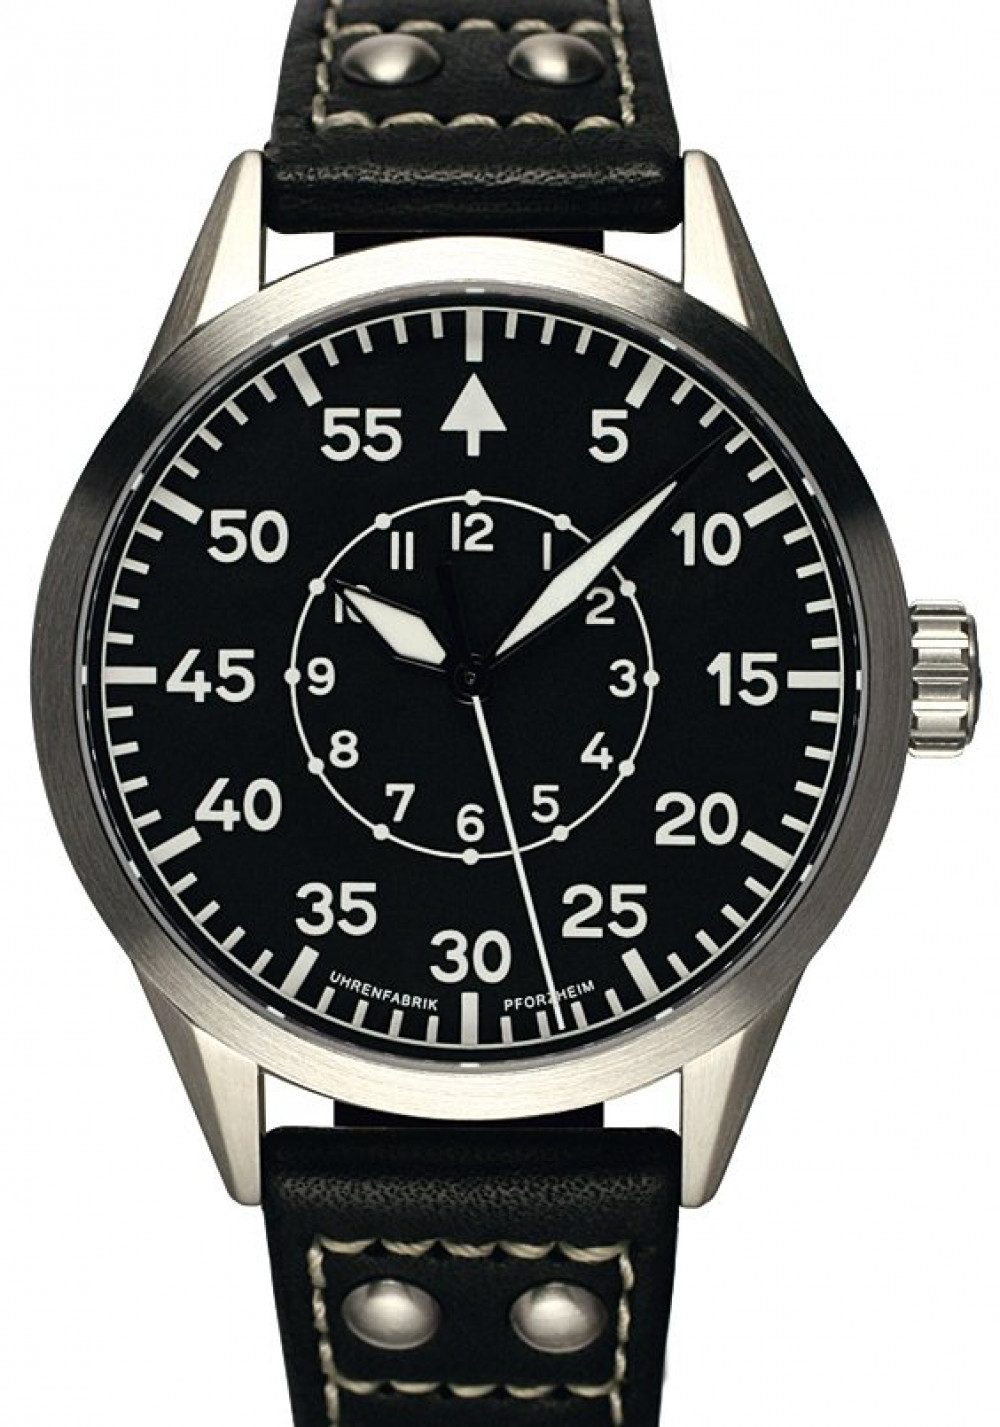 Zegarek firmy Autran & Viala, model Aviator B